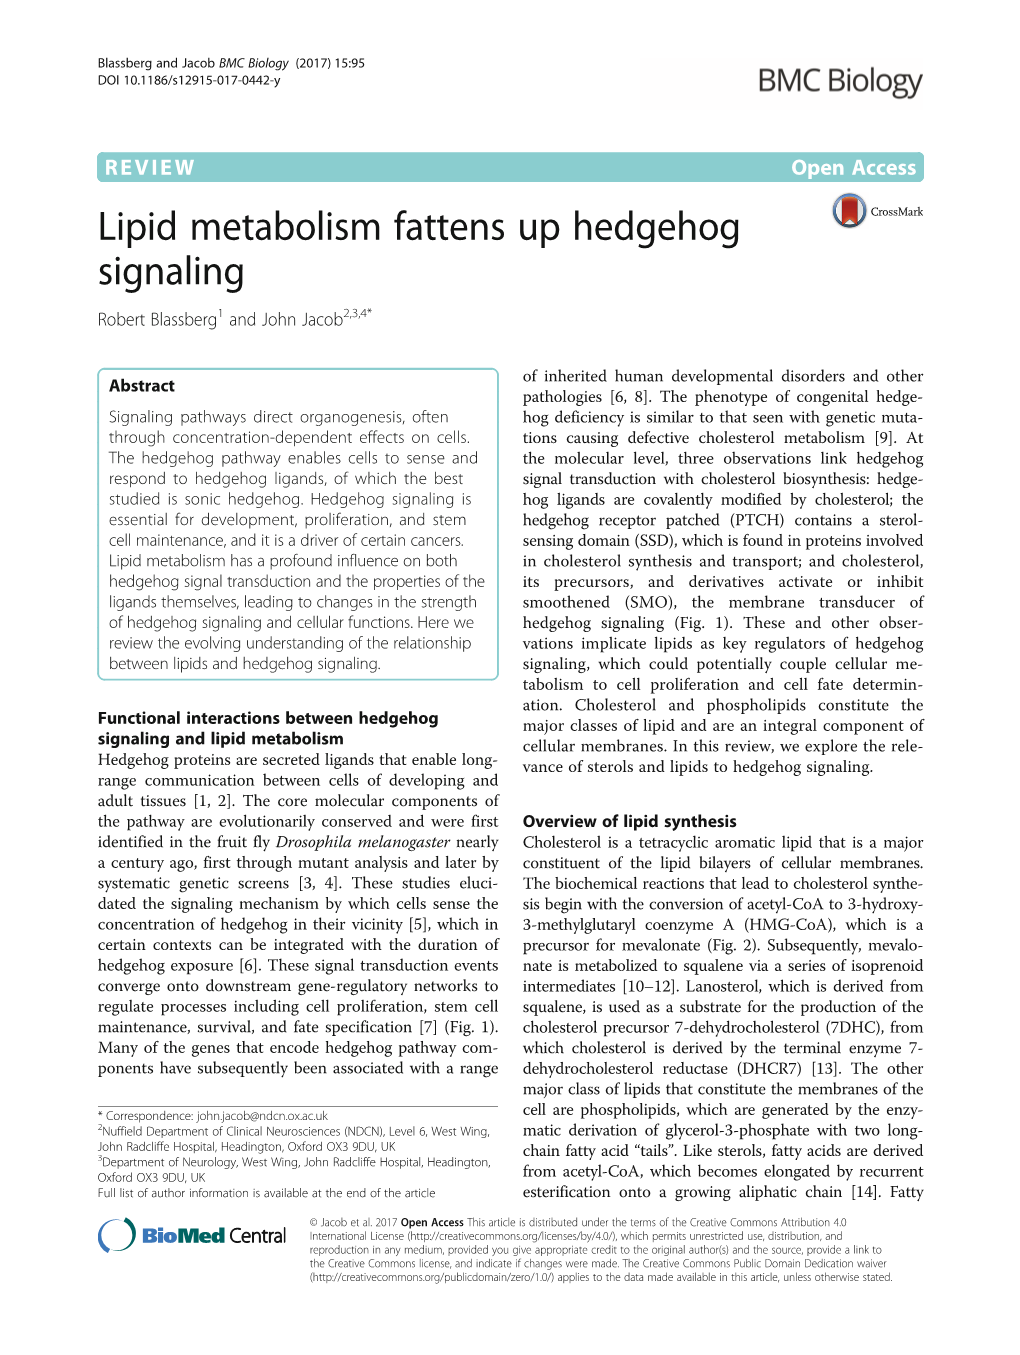 Lipid Metabolism Fattens up Hedgehog Signaling Robert Blassberg1 and John Jacob2,3,4*